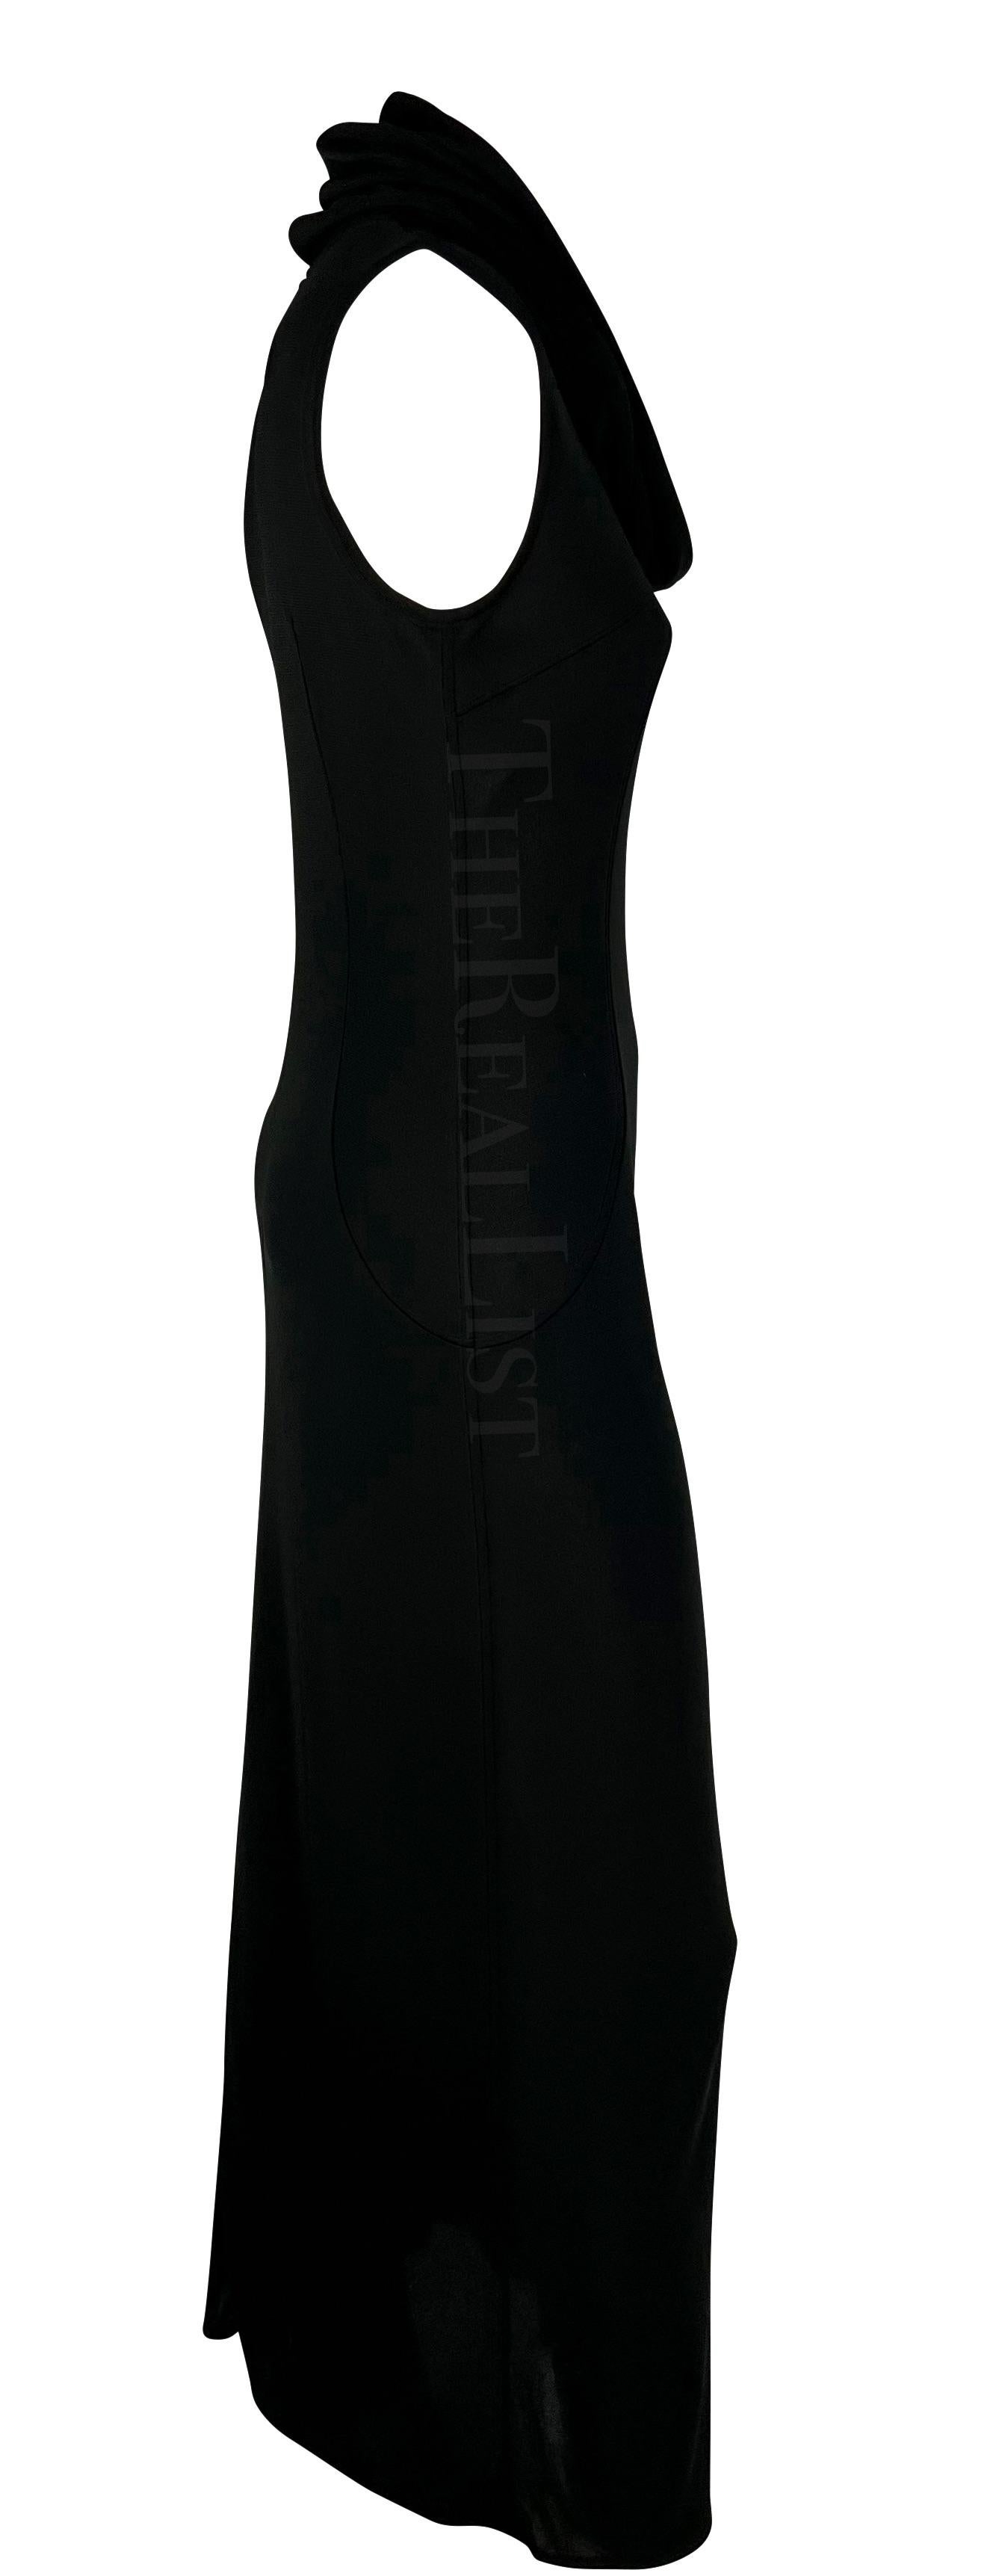 S/S 1996 Dolce & Gabbana Runway Hooded Stretch Black High Slit Dress For Sale 9